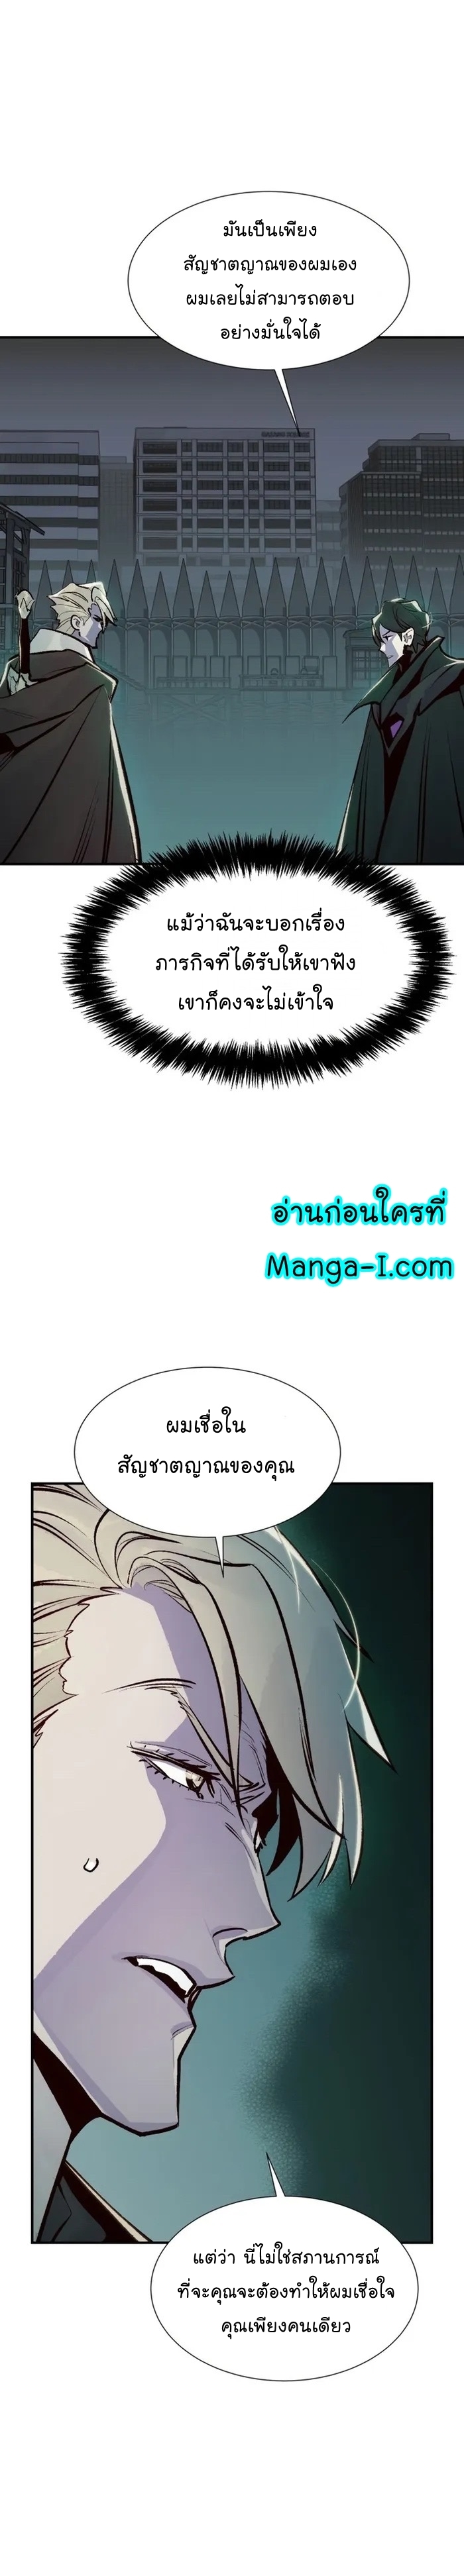 Manga Manwha I The Lone Necromancer 100 (33)